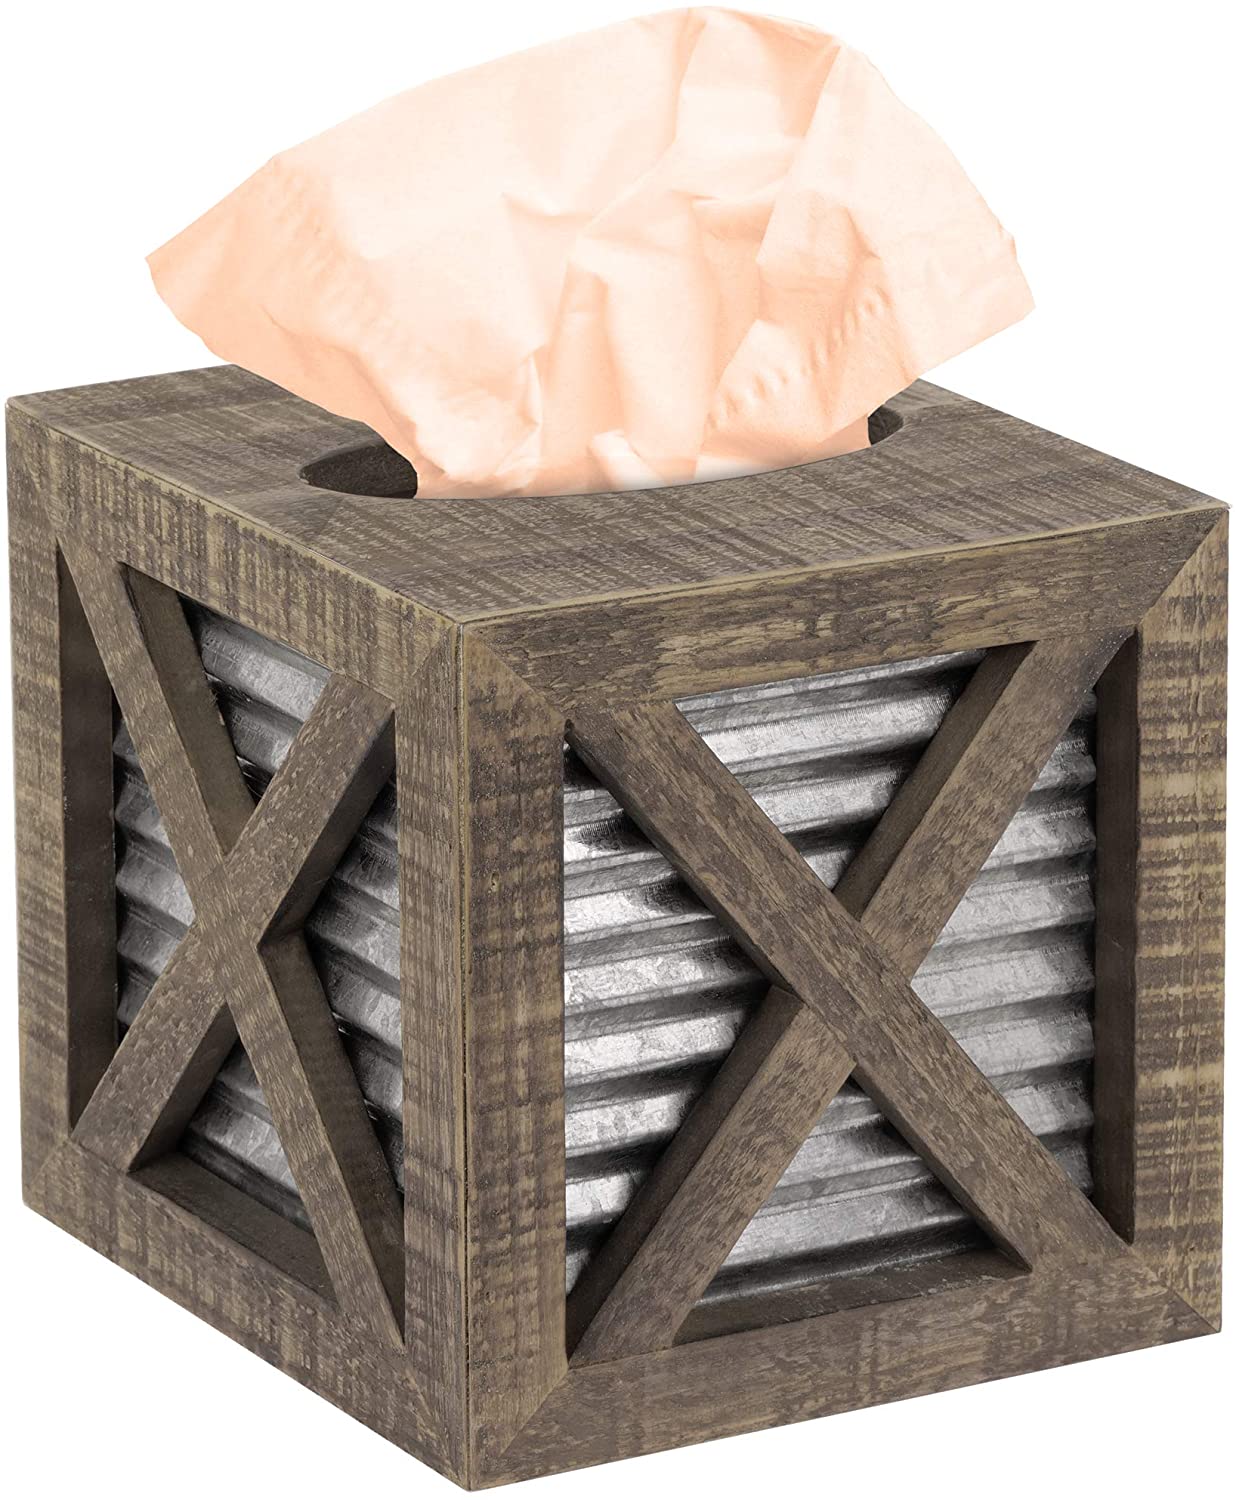 farmhouse-bathroom-decor-tissue-box